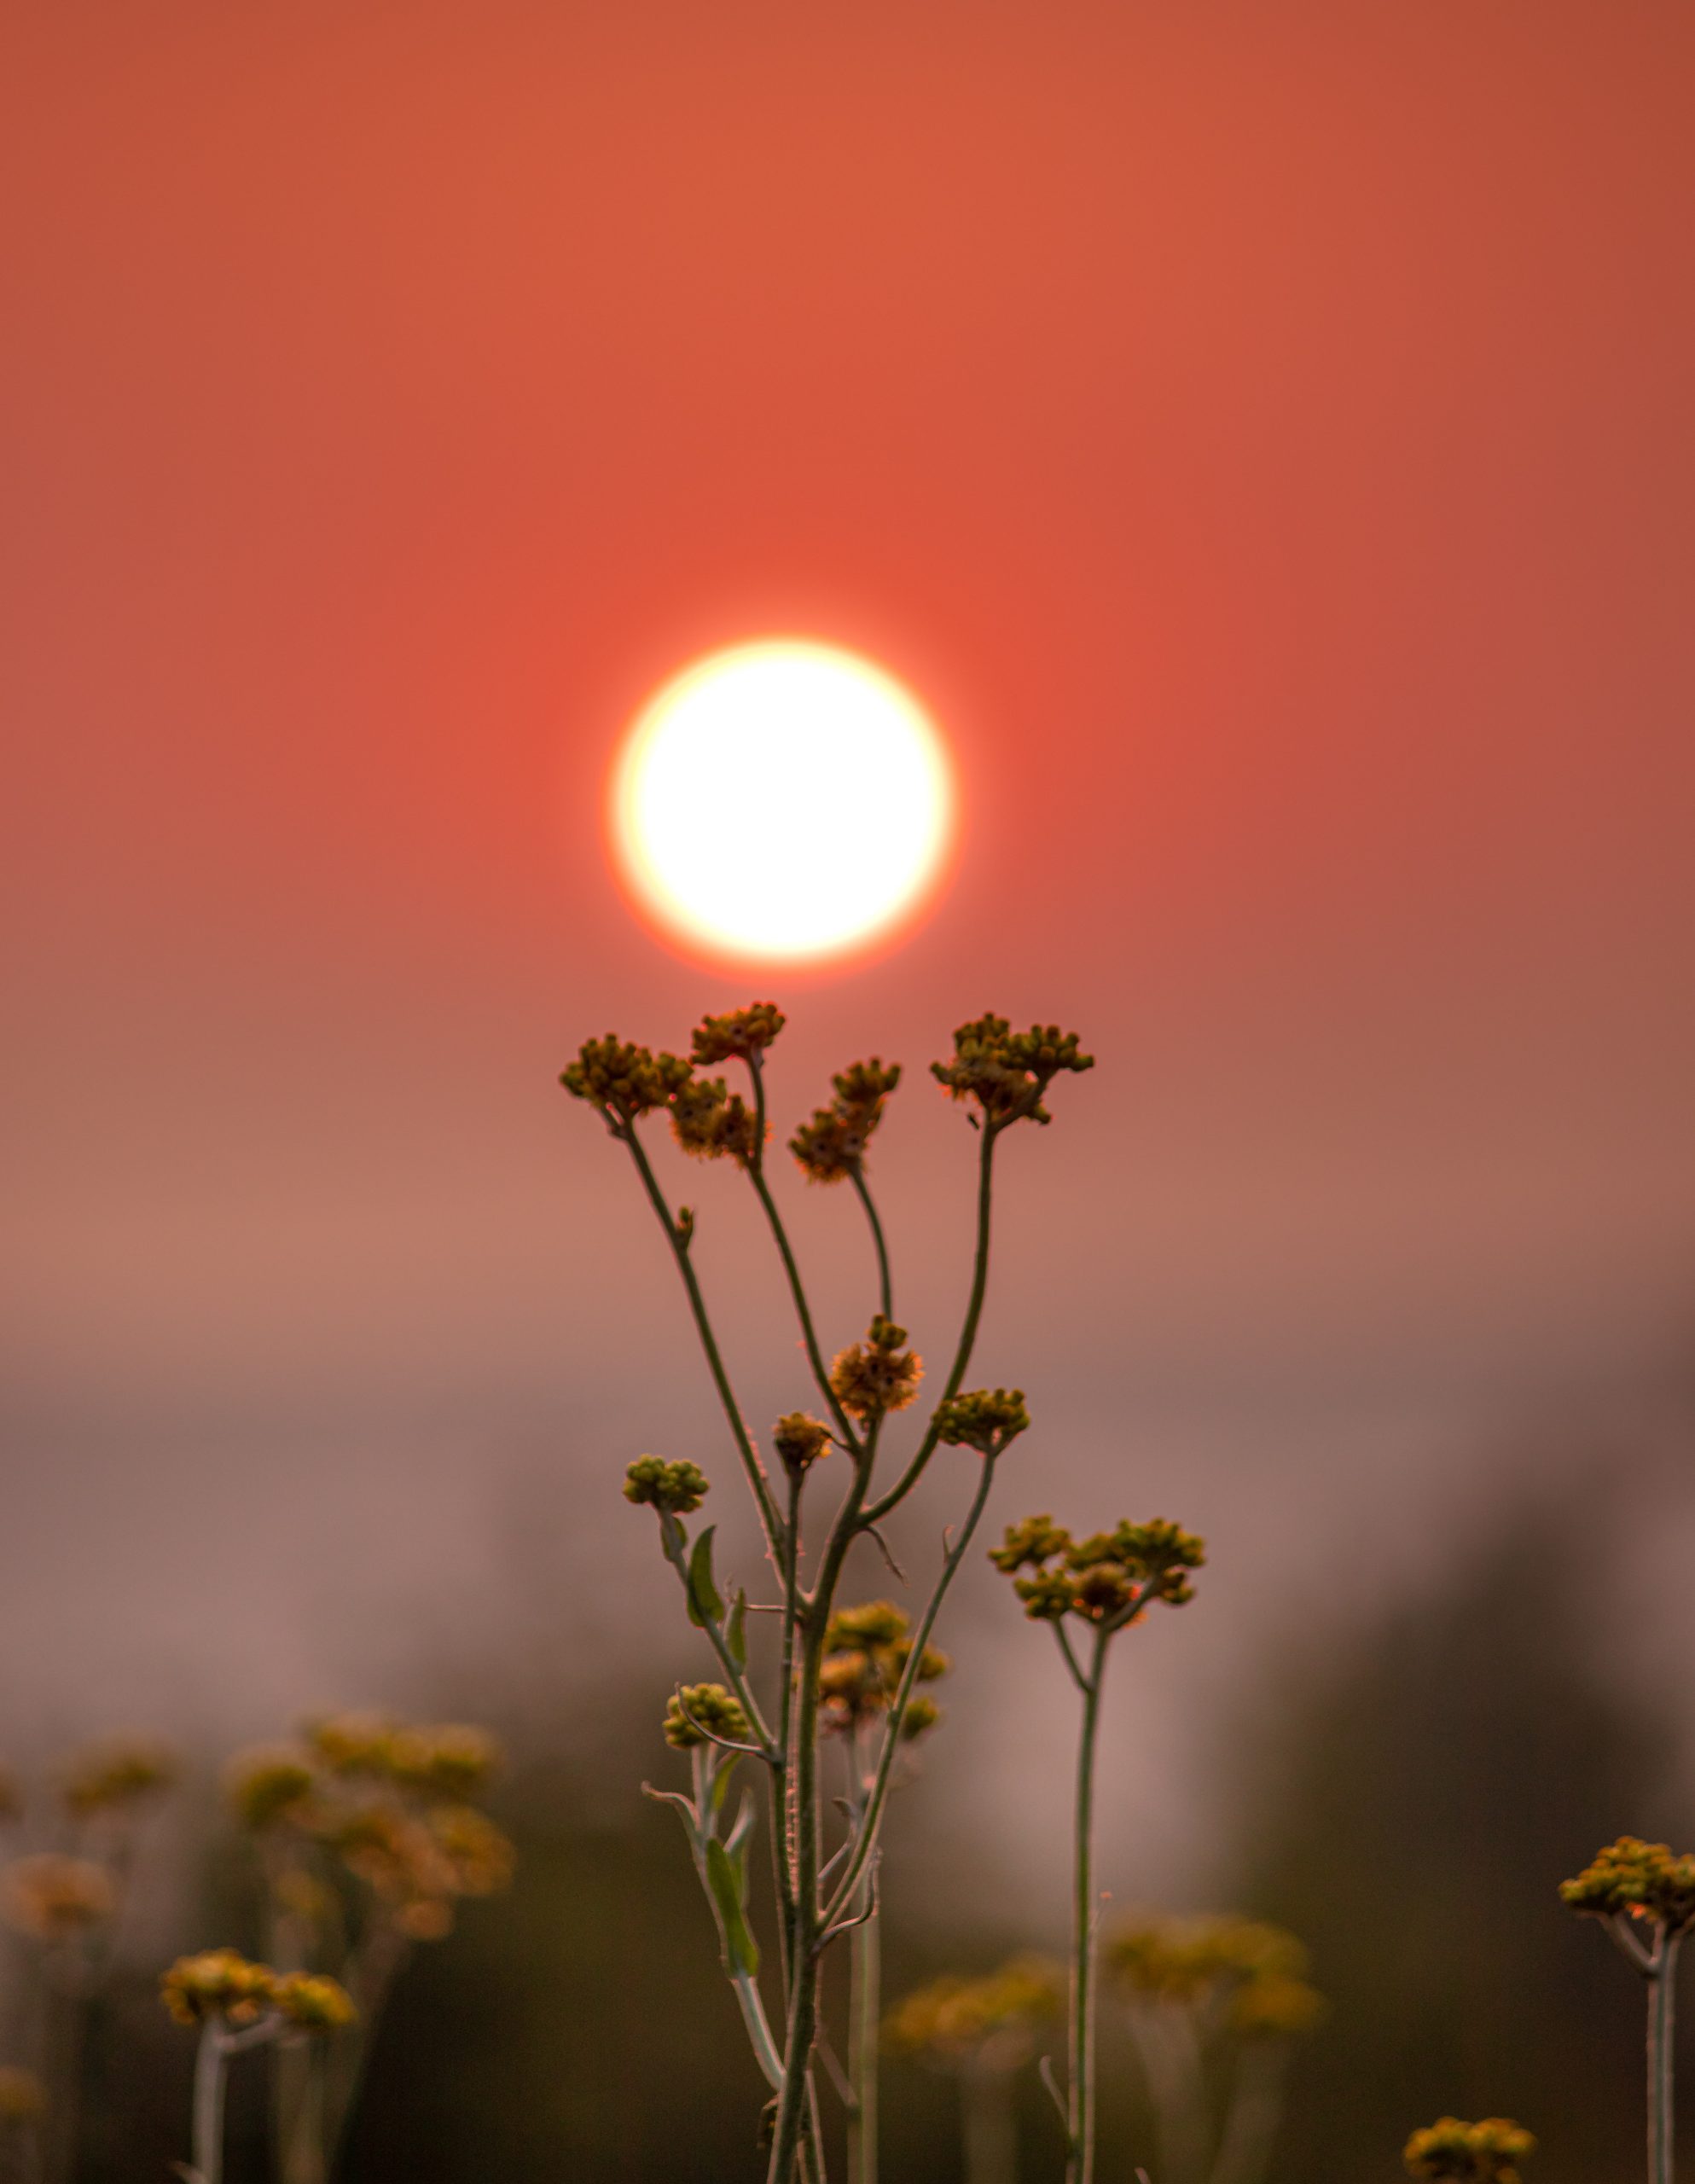 flowers against sunset